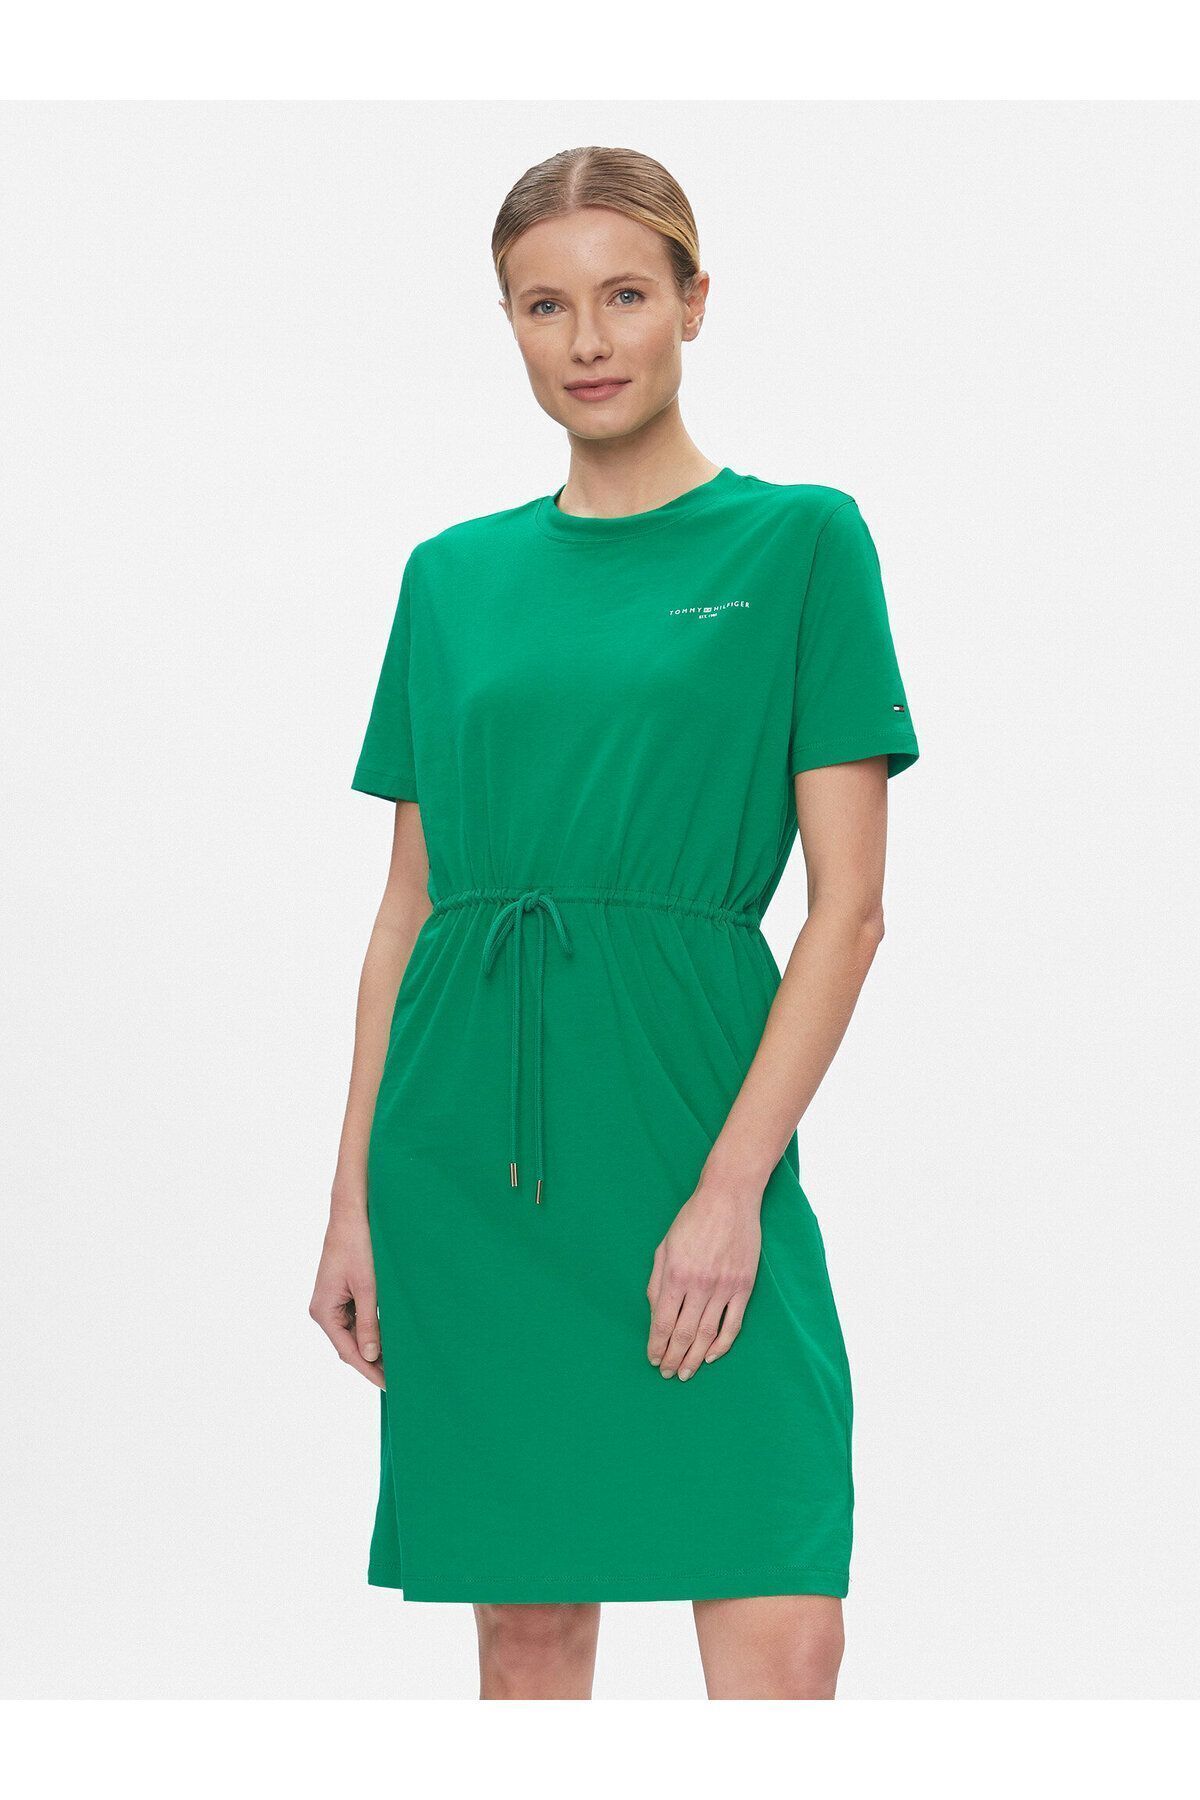 Tommy Hilfiger Kadın Marka Logolu Kısa Kol Yuvarlak Yaka Yeşil Elbise WW0WW40734-L4B